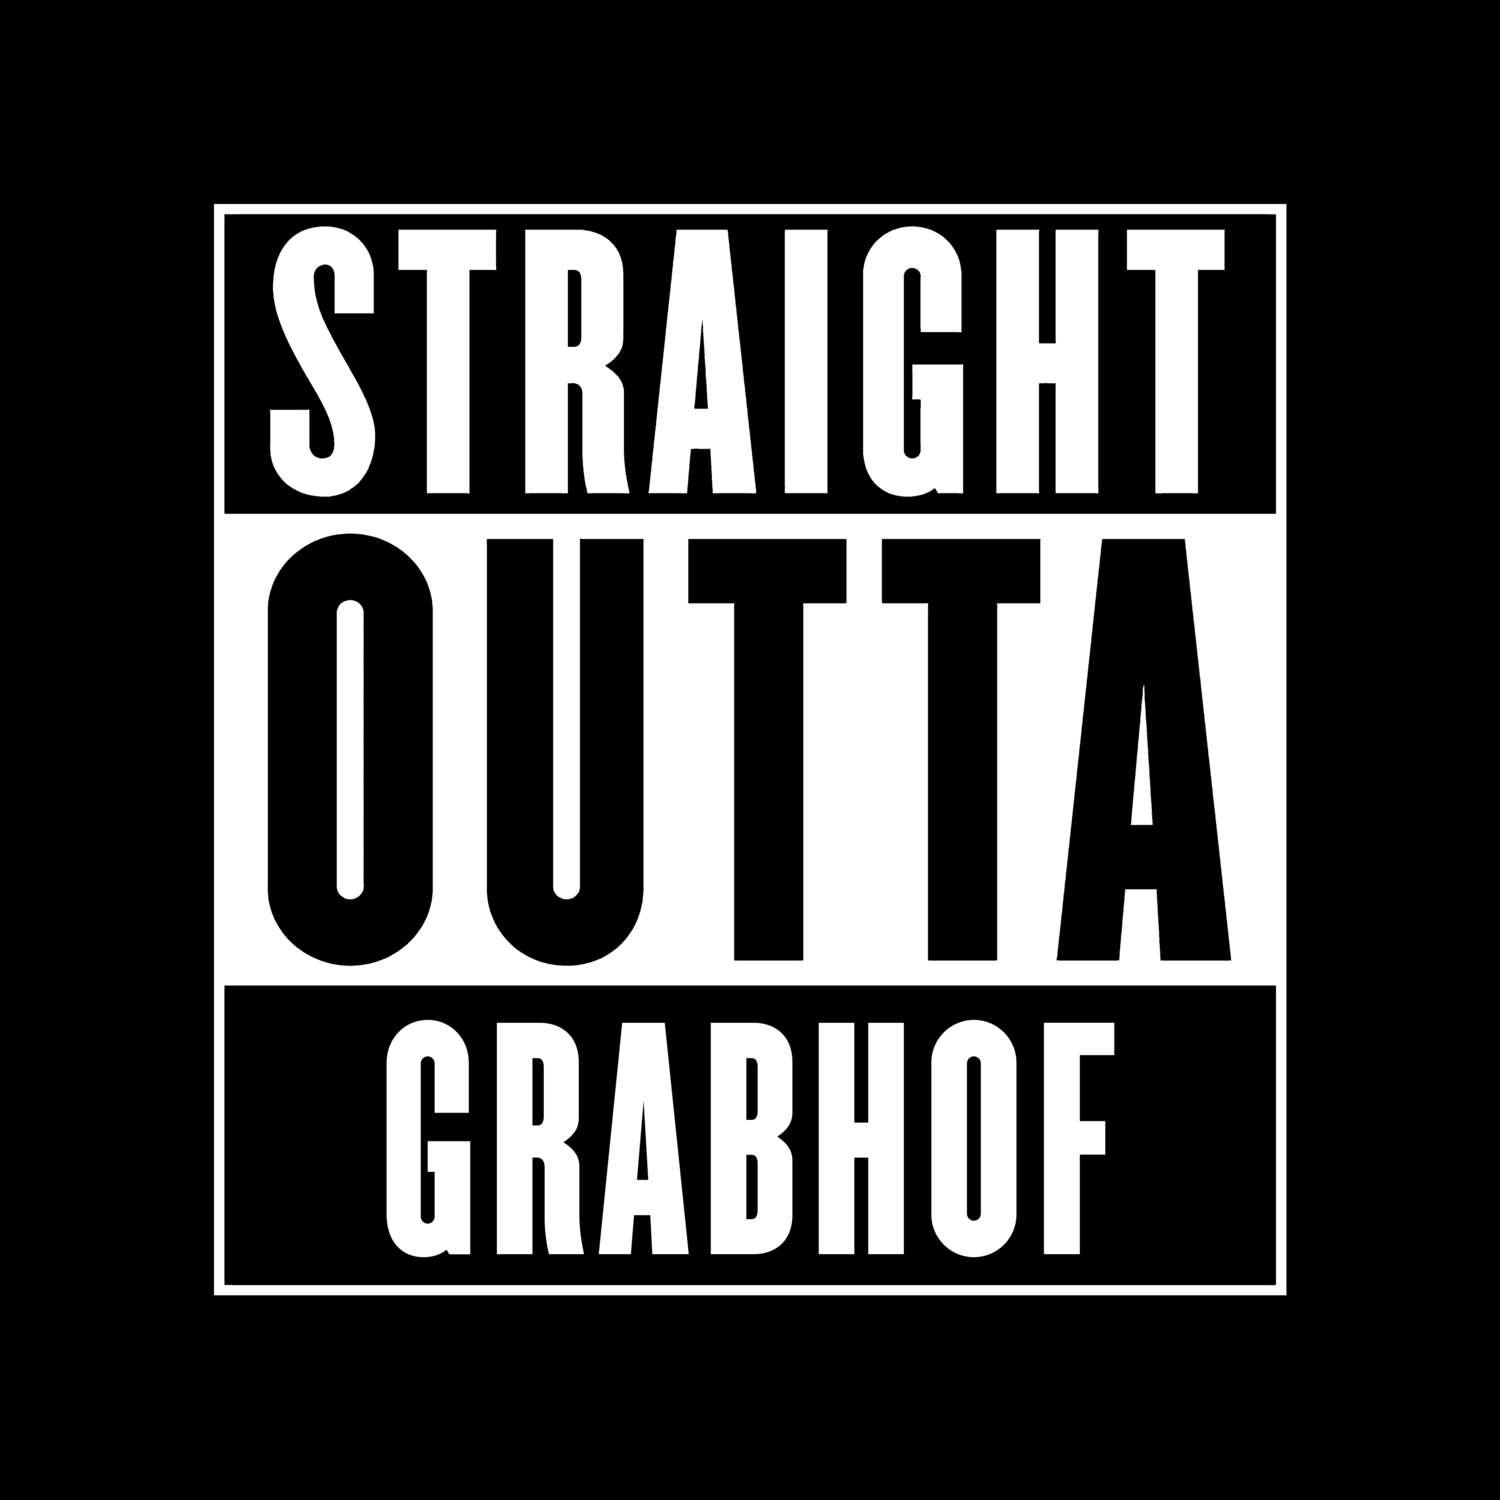 Grabhof T-Shirt »Straight Outta«